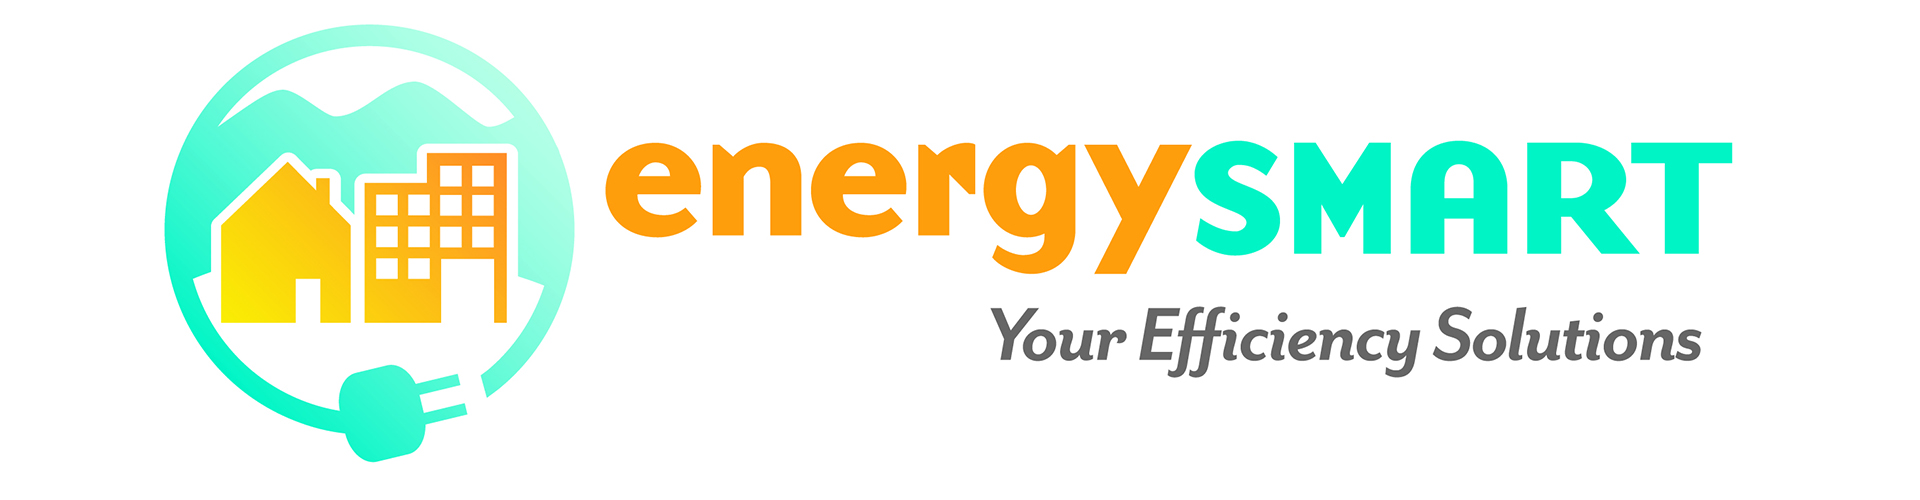 EnergySmart program logo